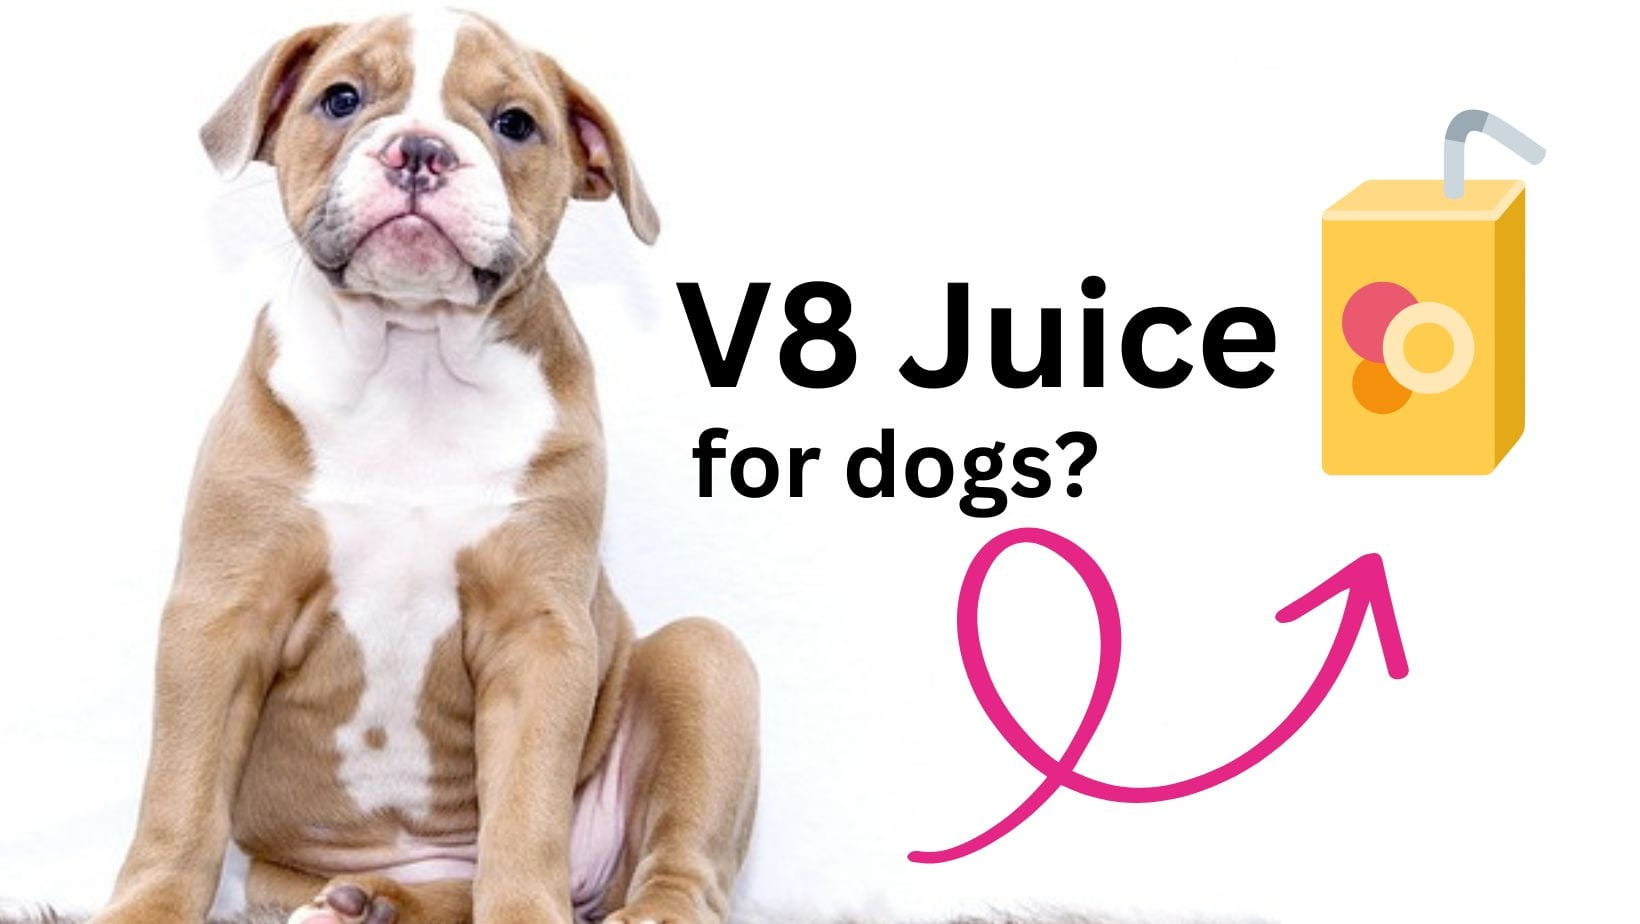 V8 Juice for dogs?